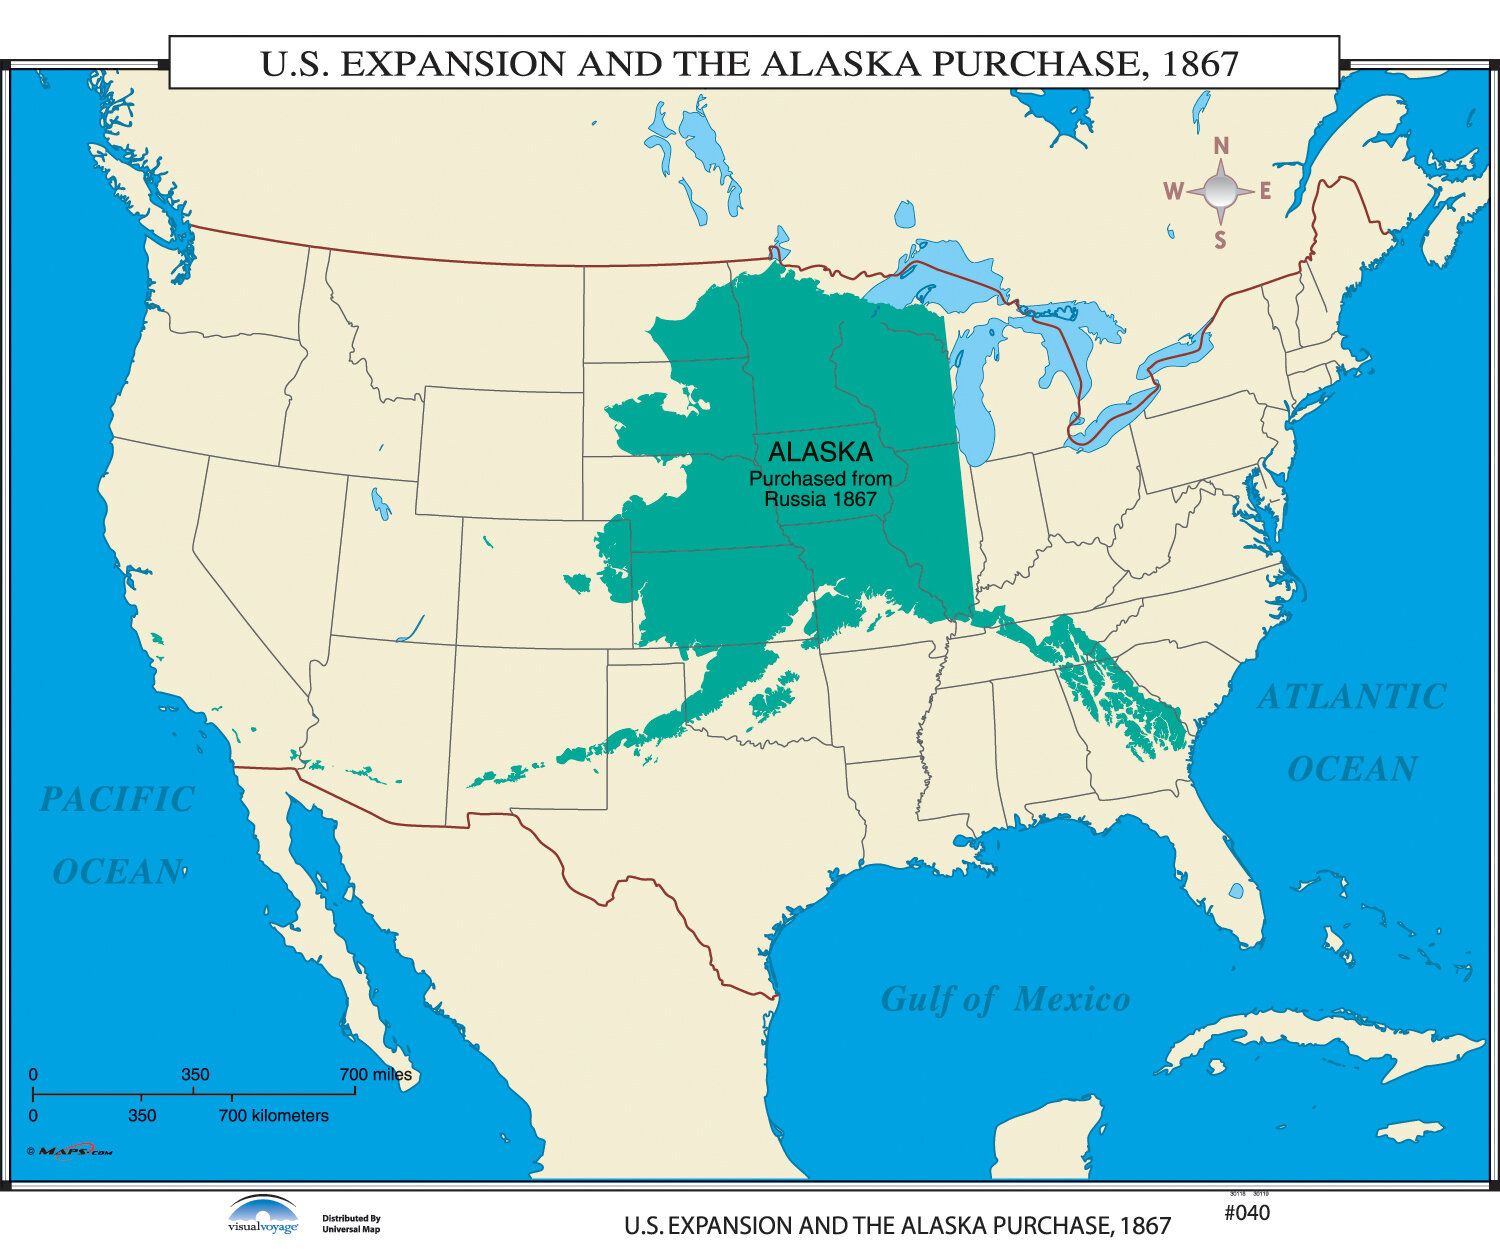 Universal Map U.S. History Wall Maps.S. Expansion & Alaska